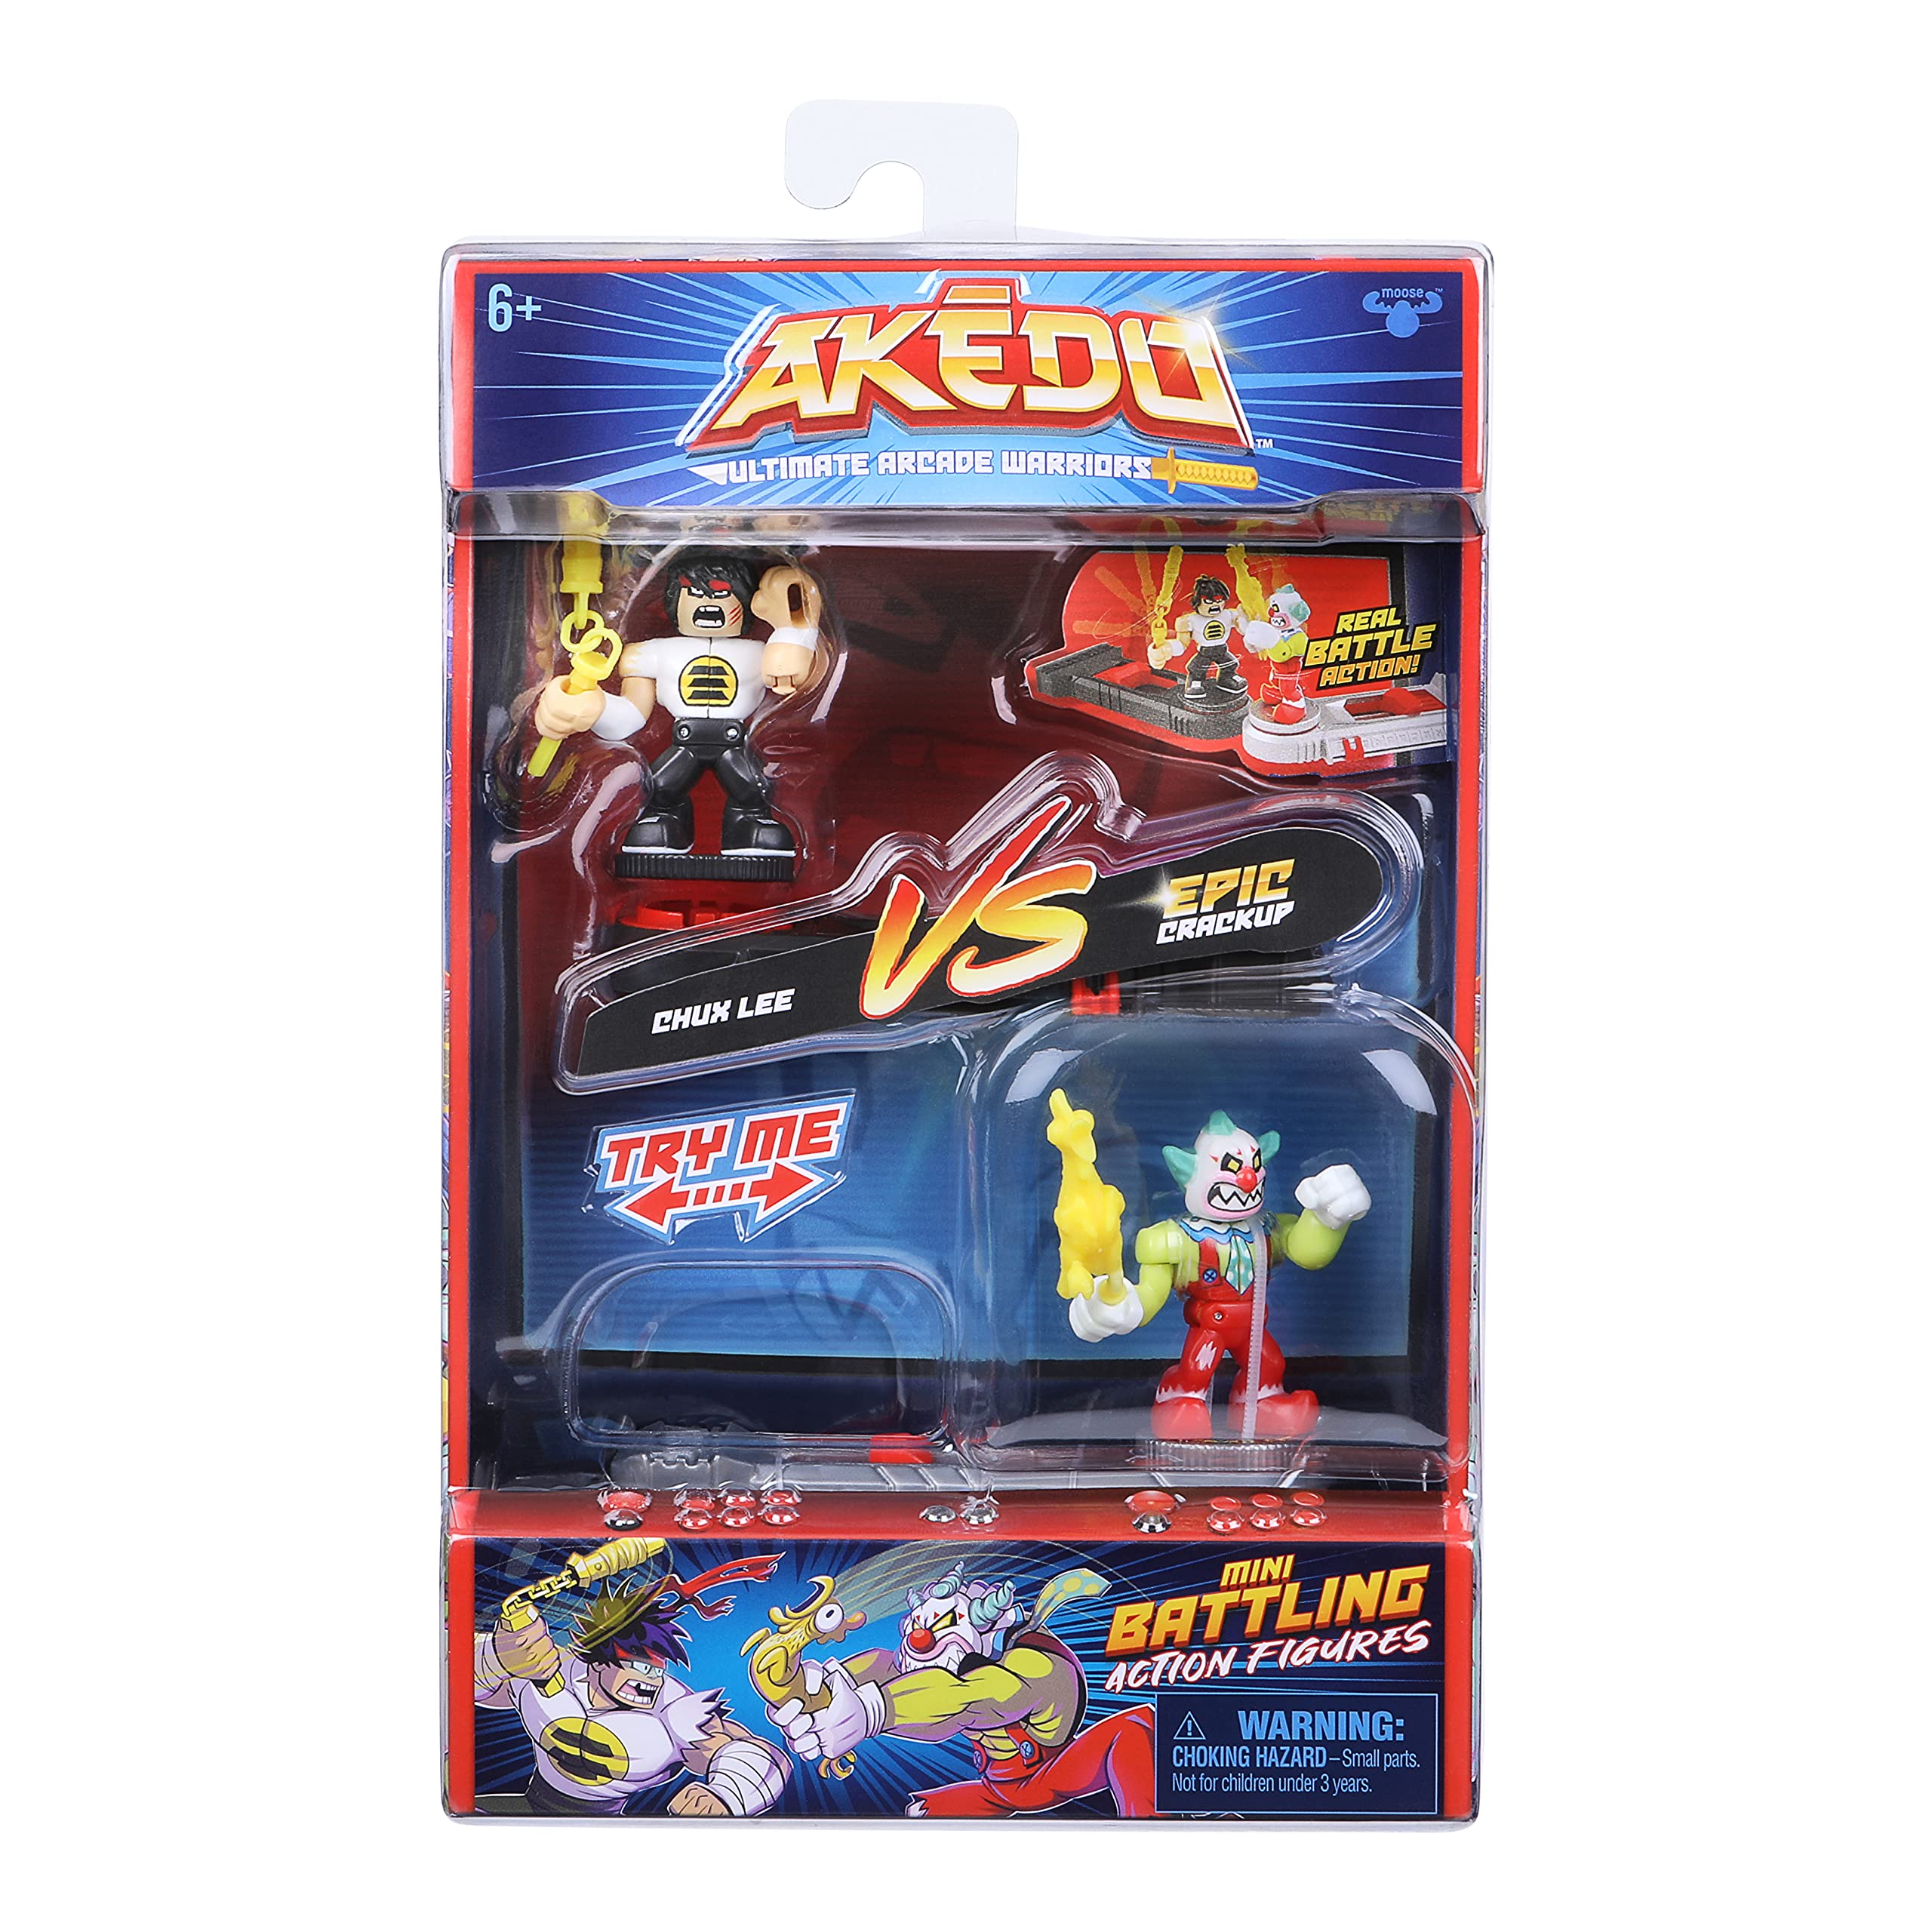 Akedo Ultimate Arcade Warriors Versus Pack - Chux Lee Vs Crackup, Multicolor (14257)